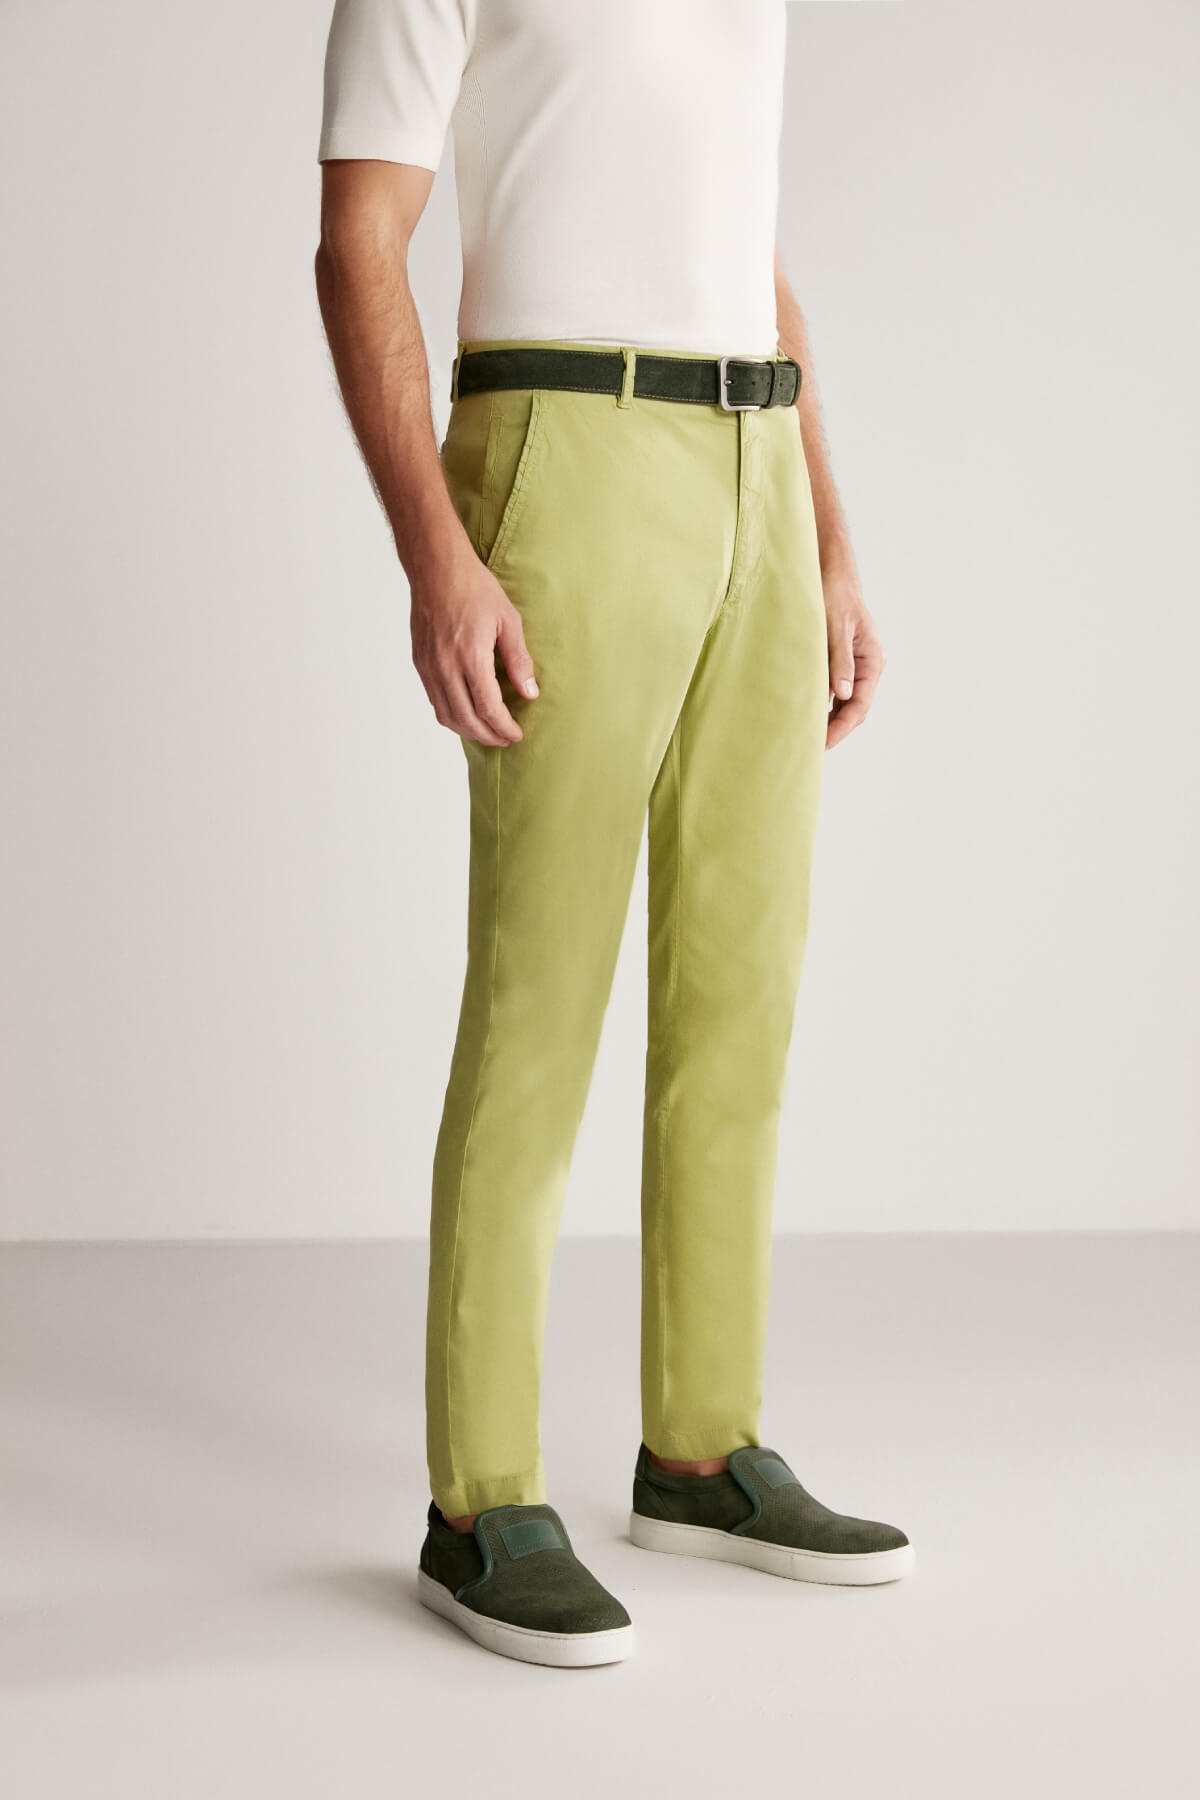 Yeşil Yazlık Chino Pantolon